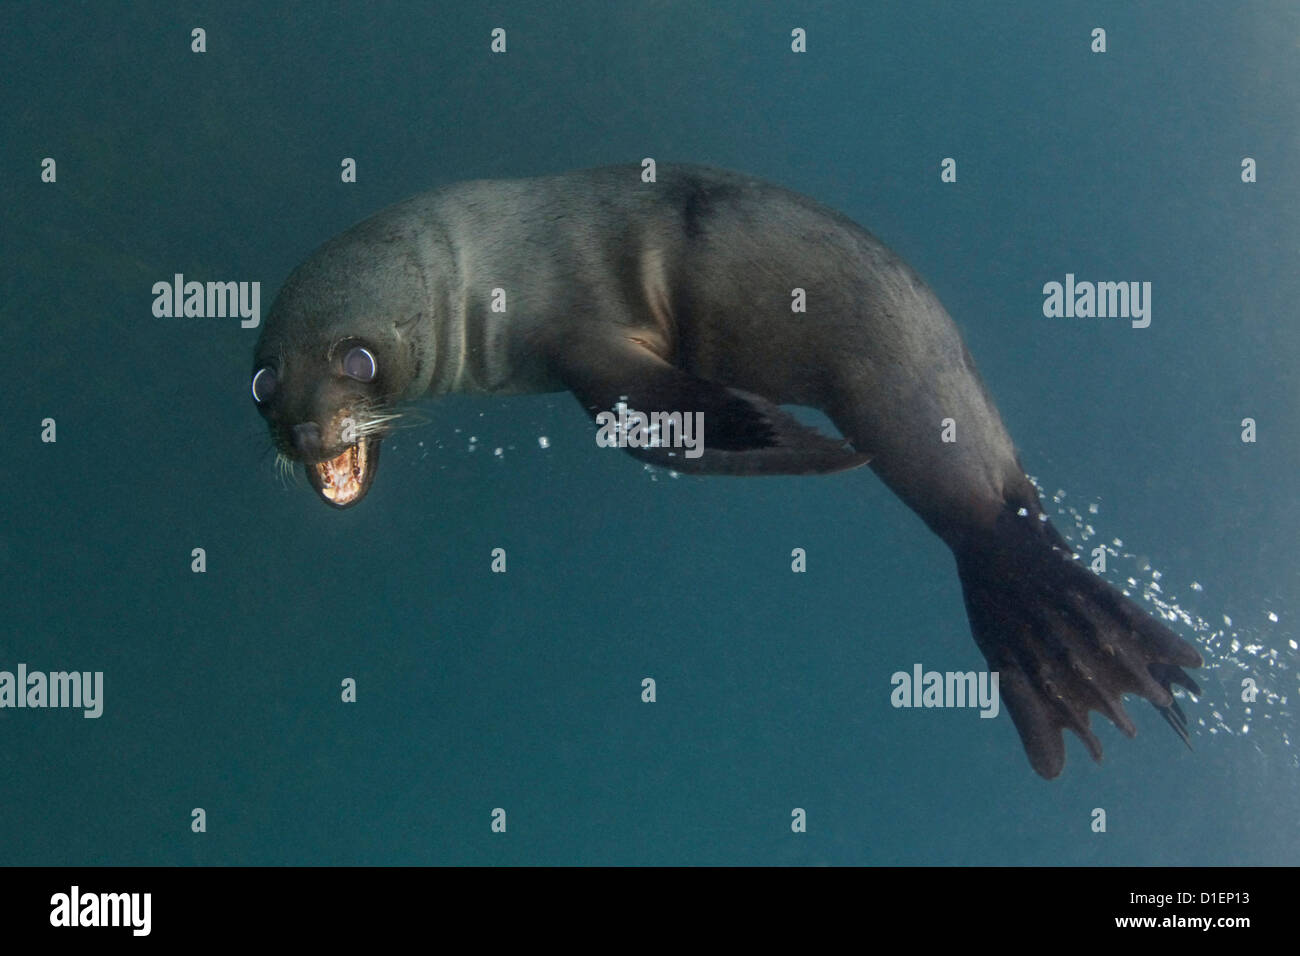 New Zealand fur seal (Arctocephalus forsteri), Kaikoura, South Island, New Zealand, Pacific Ocean, underwater shot Stock Photo